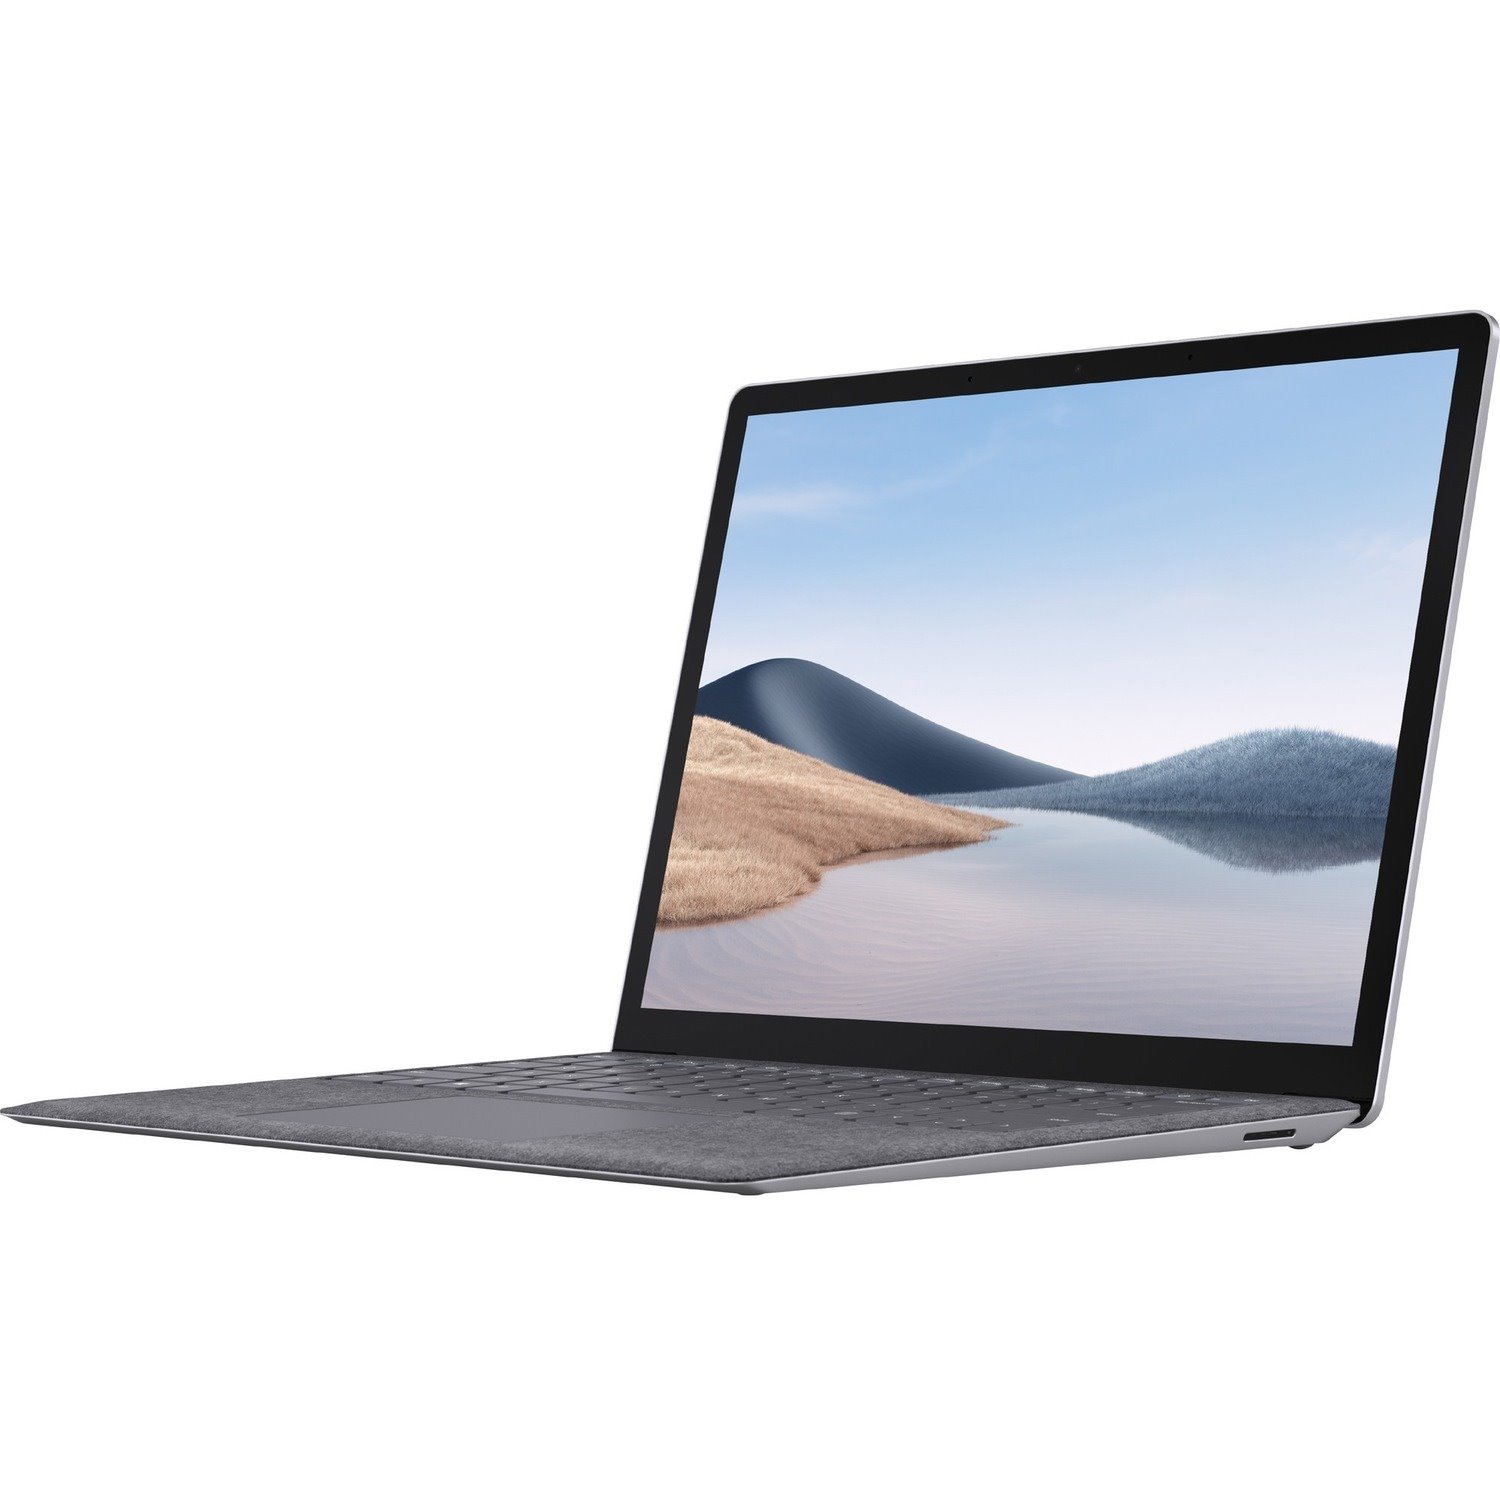 Microsoft Surface Laptop 4 34.3 cm (13.5") Touchscreen Notebook - 2256 x 1504 - Intel Core i5 - 16 GB Total RAM - 512 GB SSD - Platinum